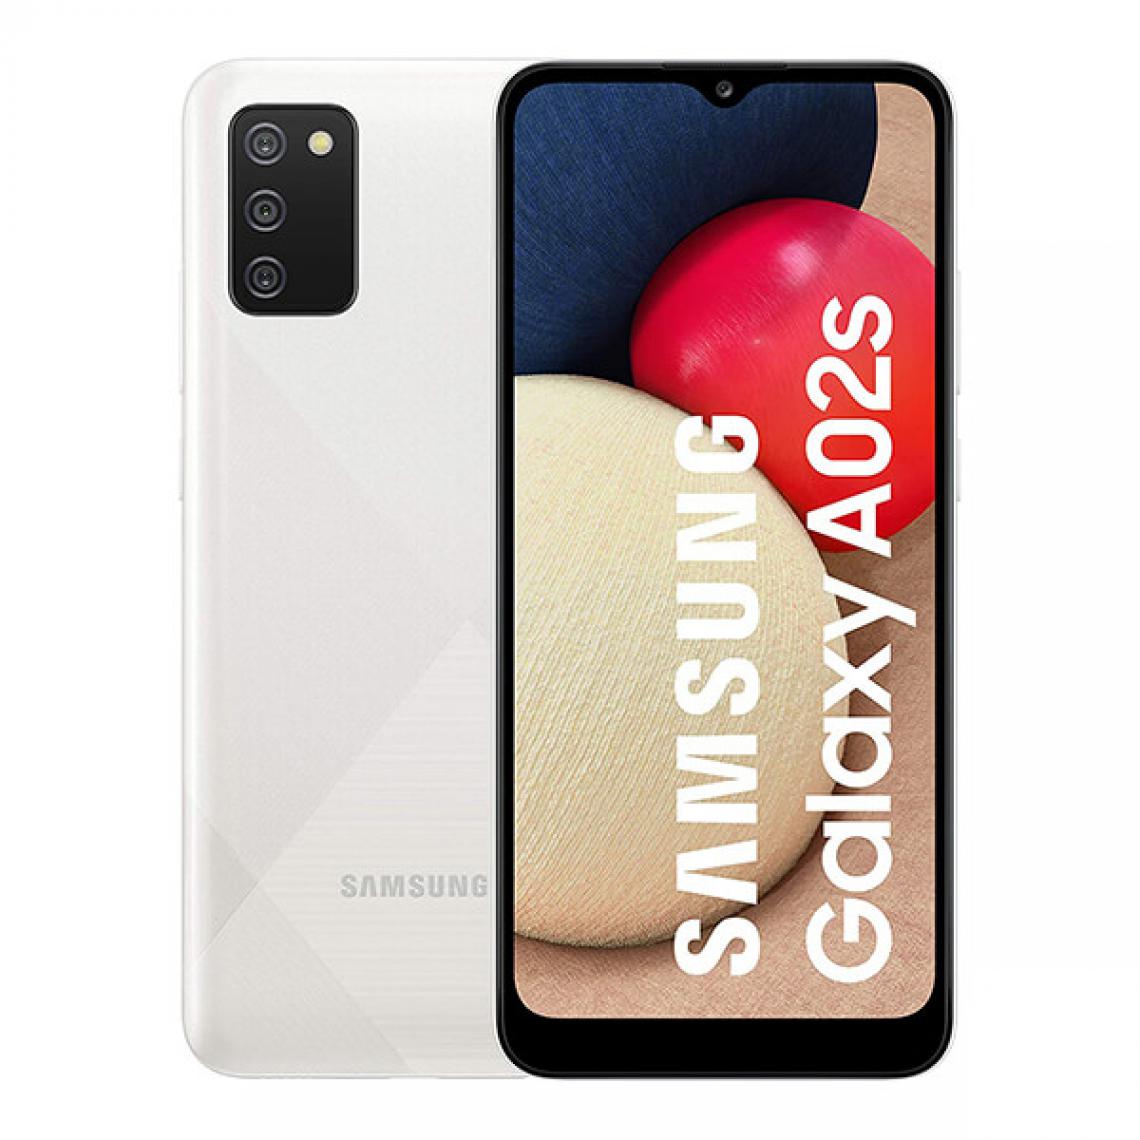 Samsung - Samsung Galaxy A02s 3GB/32GB Blanco (White) Dual SIM A025 - Smartphone Android